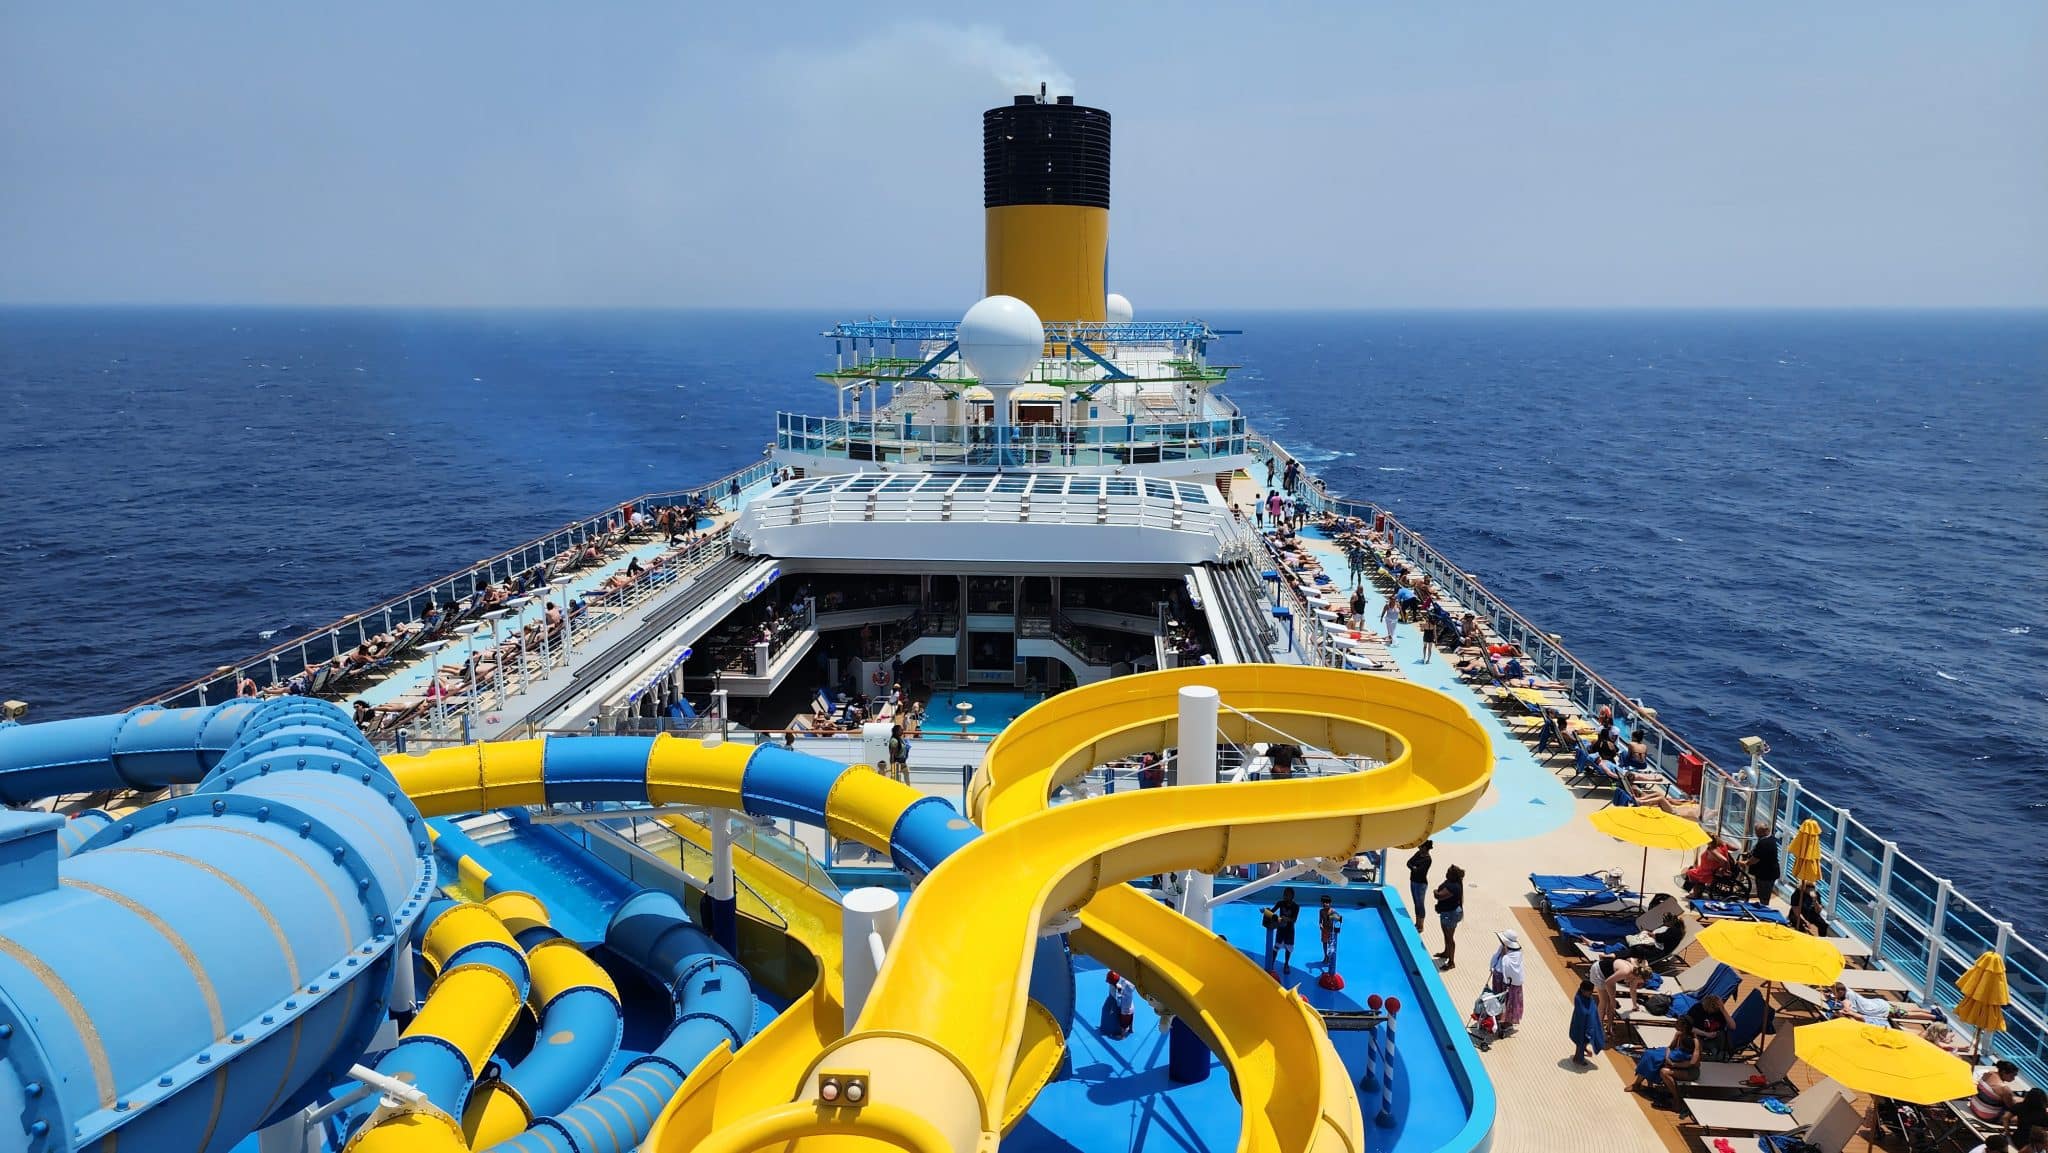 Carnival Venezia, the latest cruise ship to join Carnival's fleet